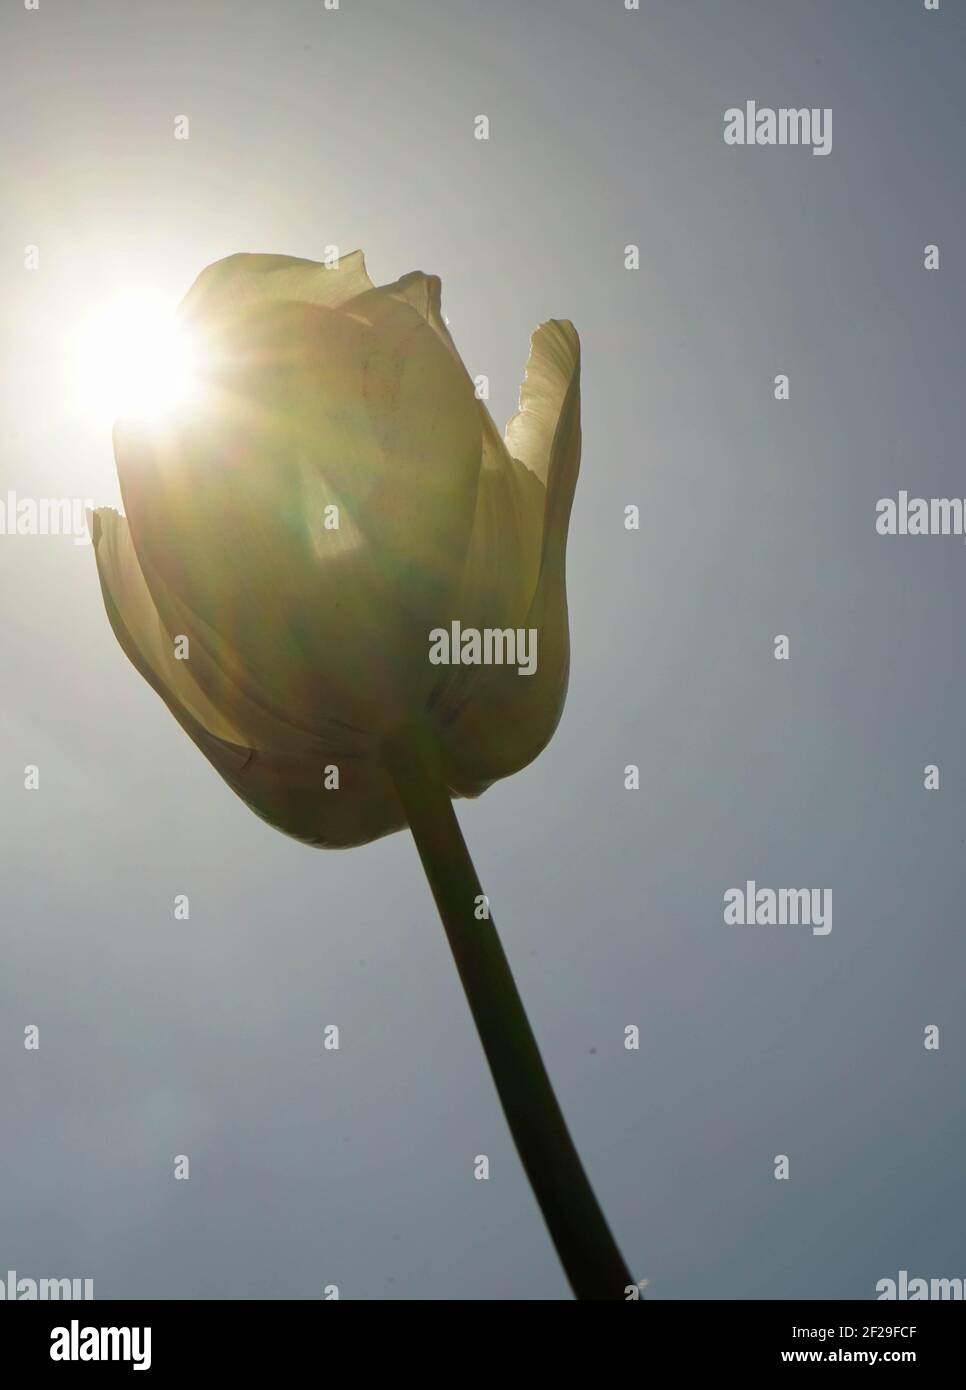 White Tulip with sun. Weiße Tulpe mit Sonne. 2020 Stock Photo